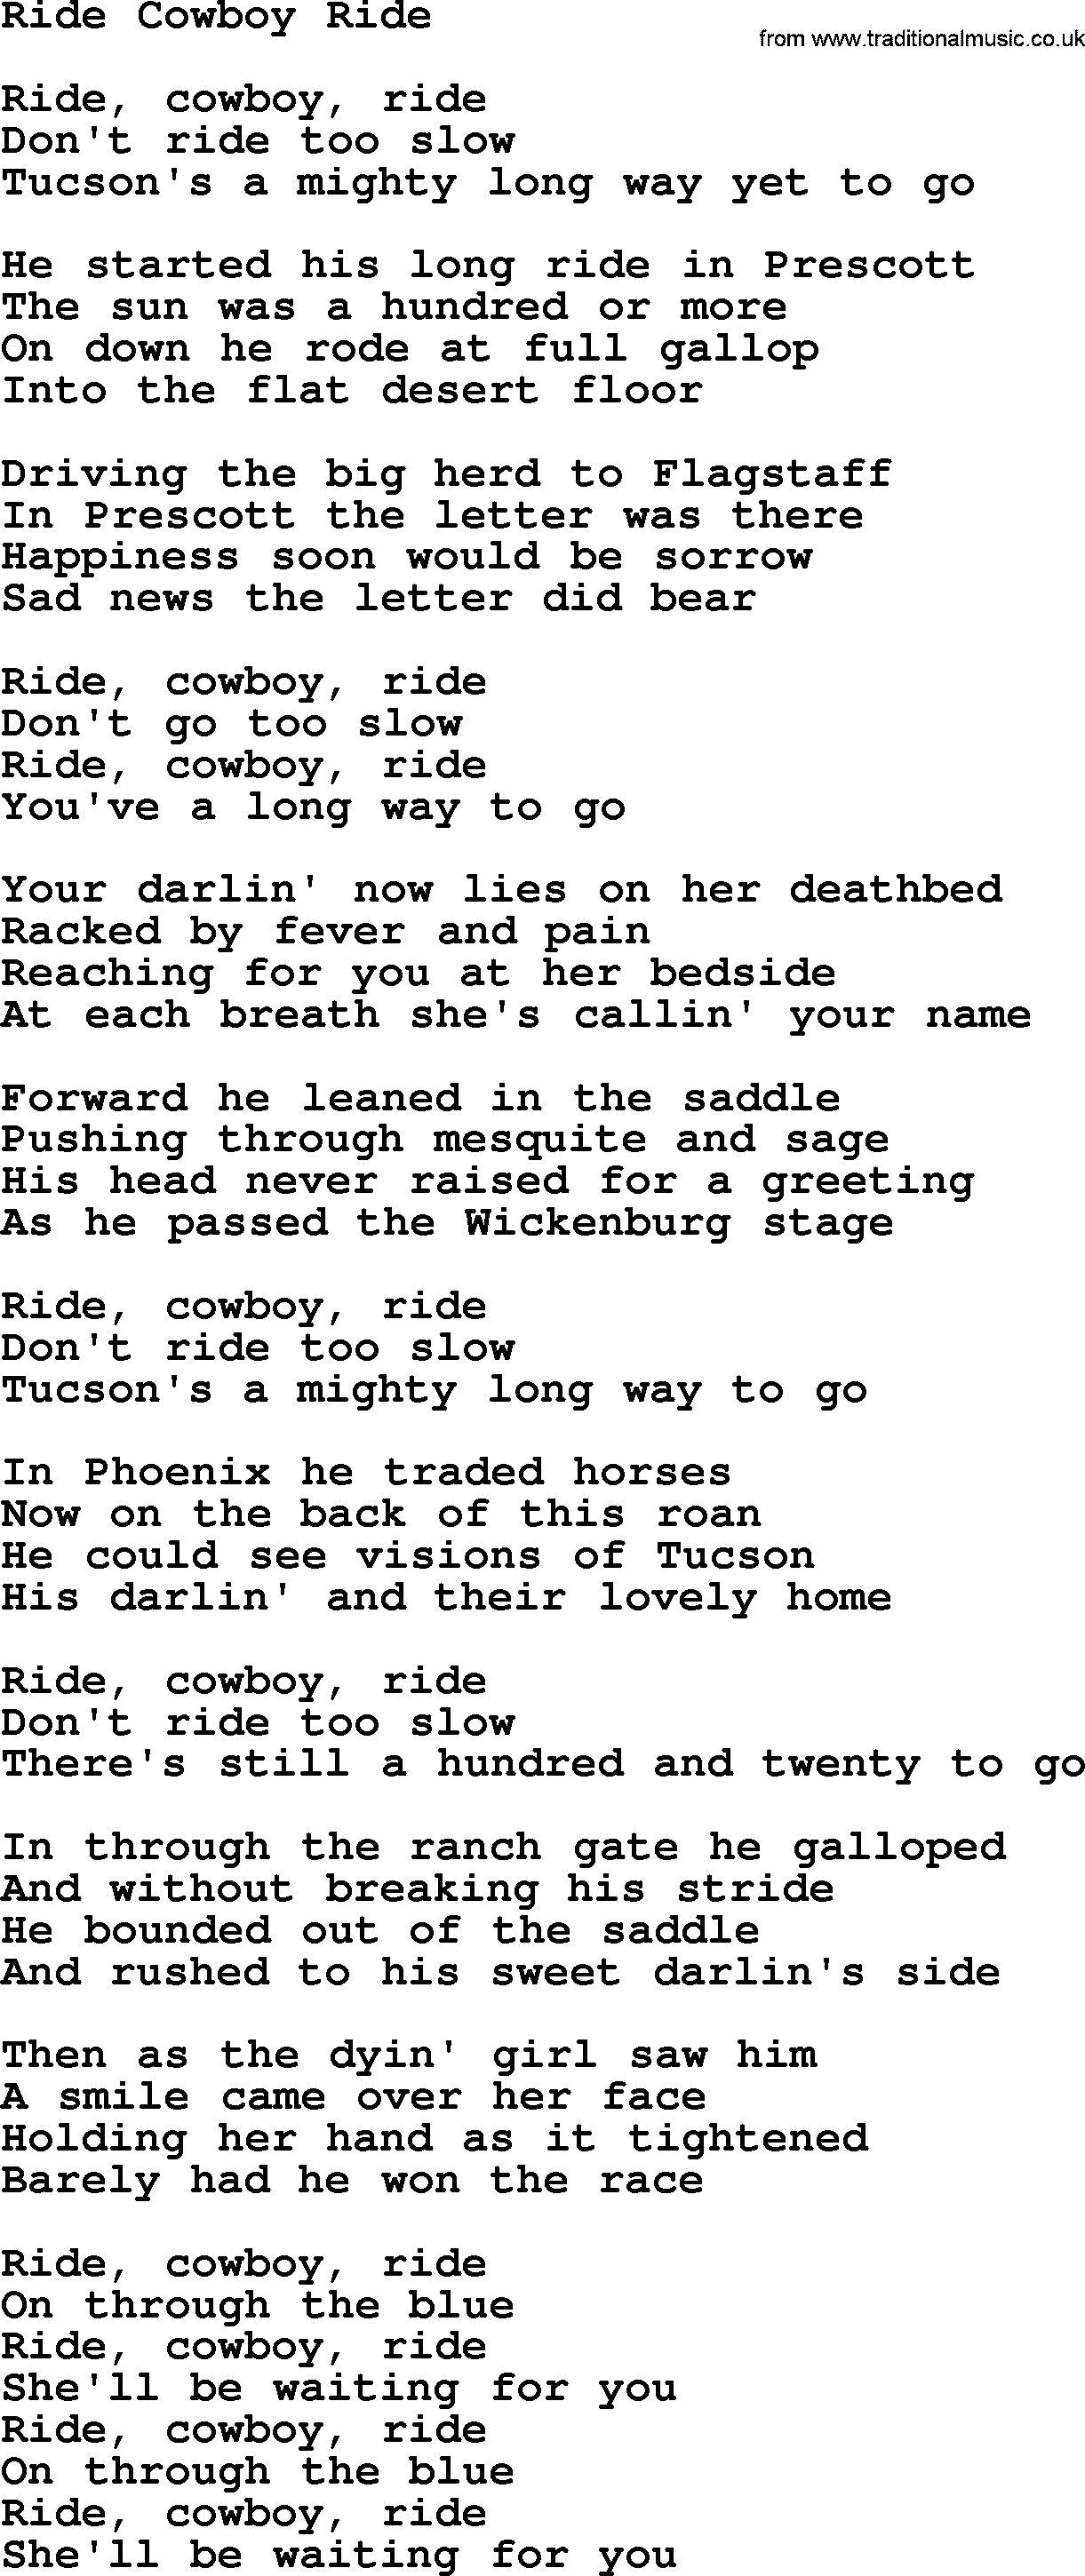 Marty Robbins song: Ride Cowboy Ride, lyrics